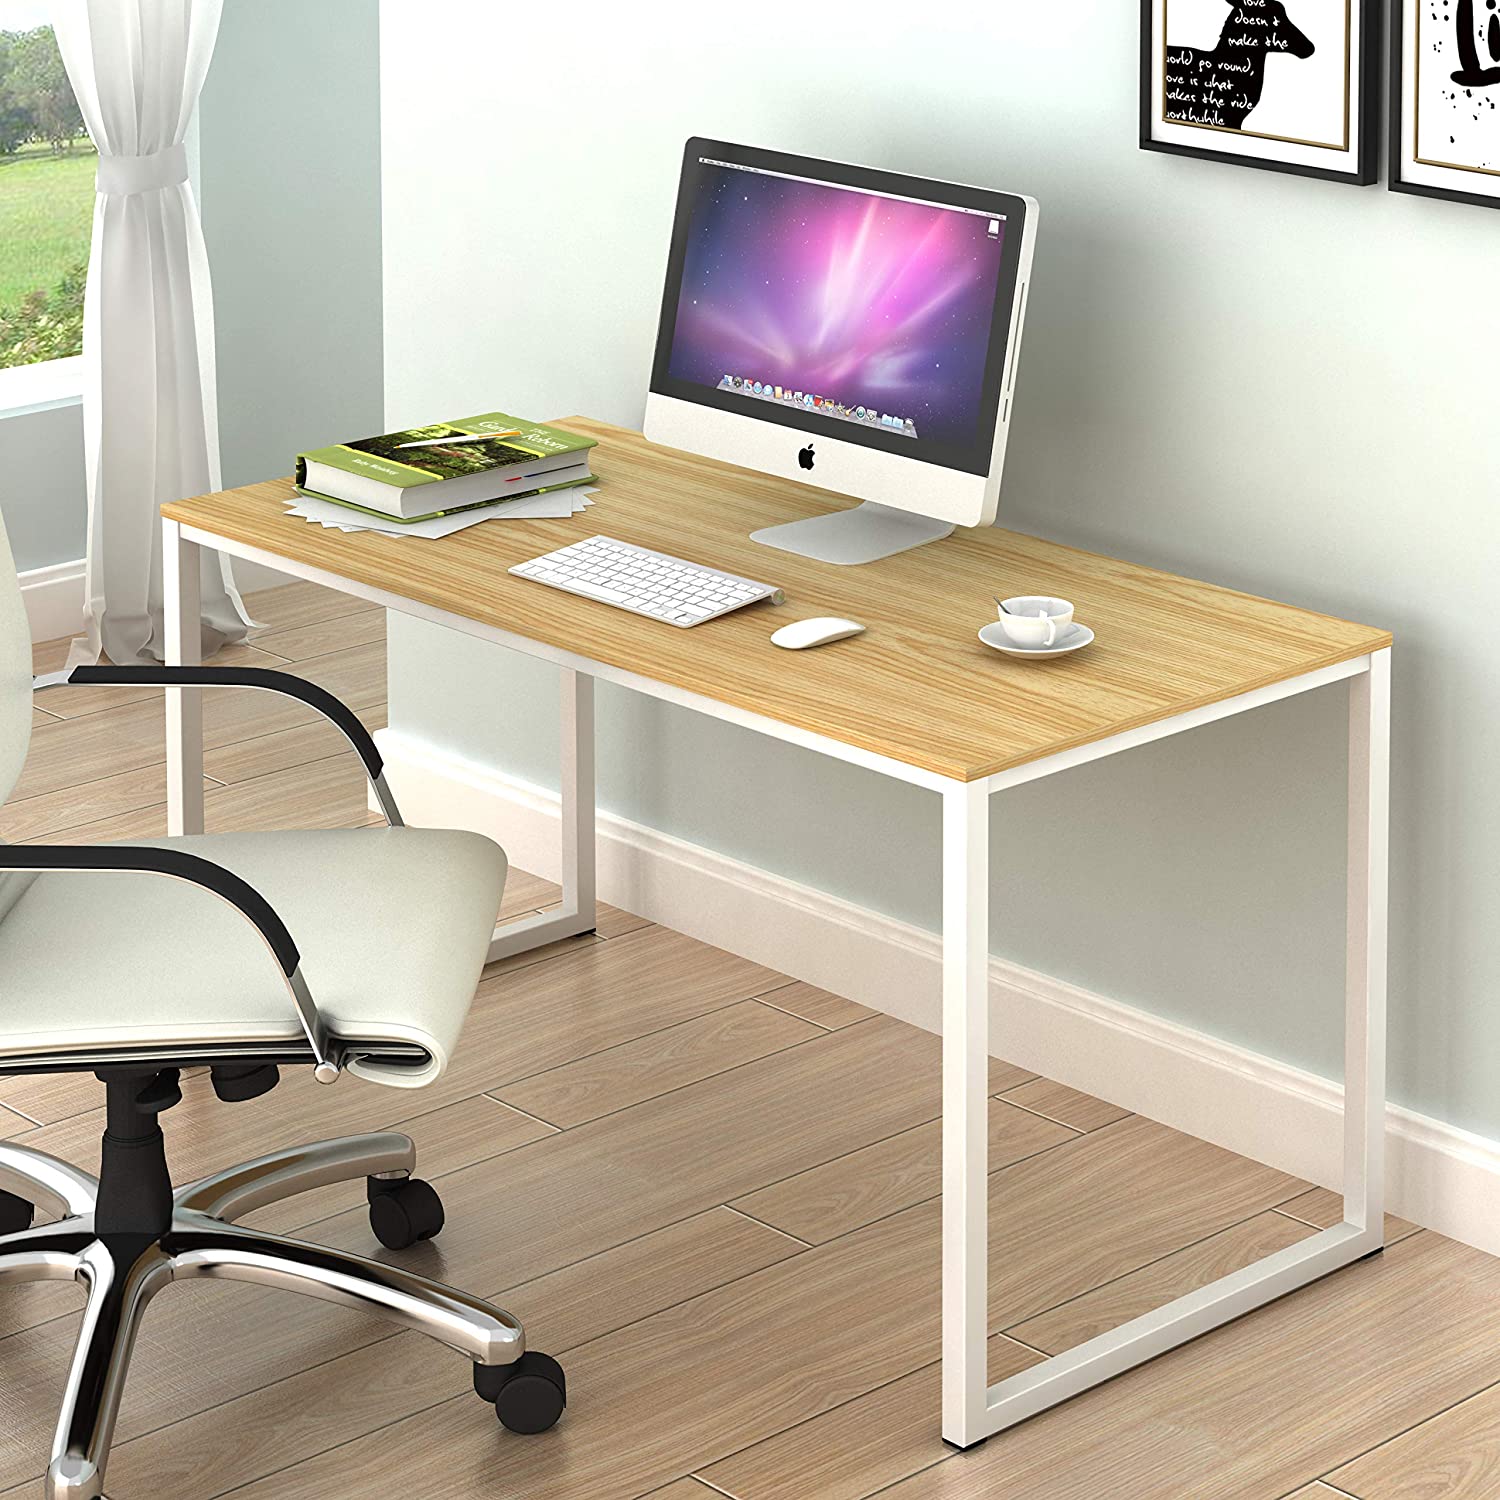 SHW Home Office 48-Inch Computer Desk, White/Oak